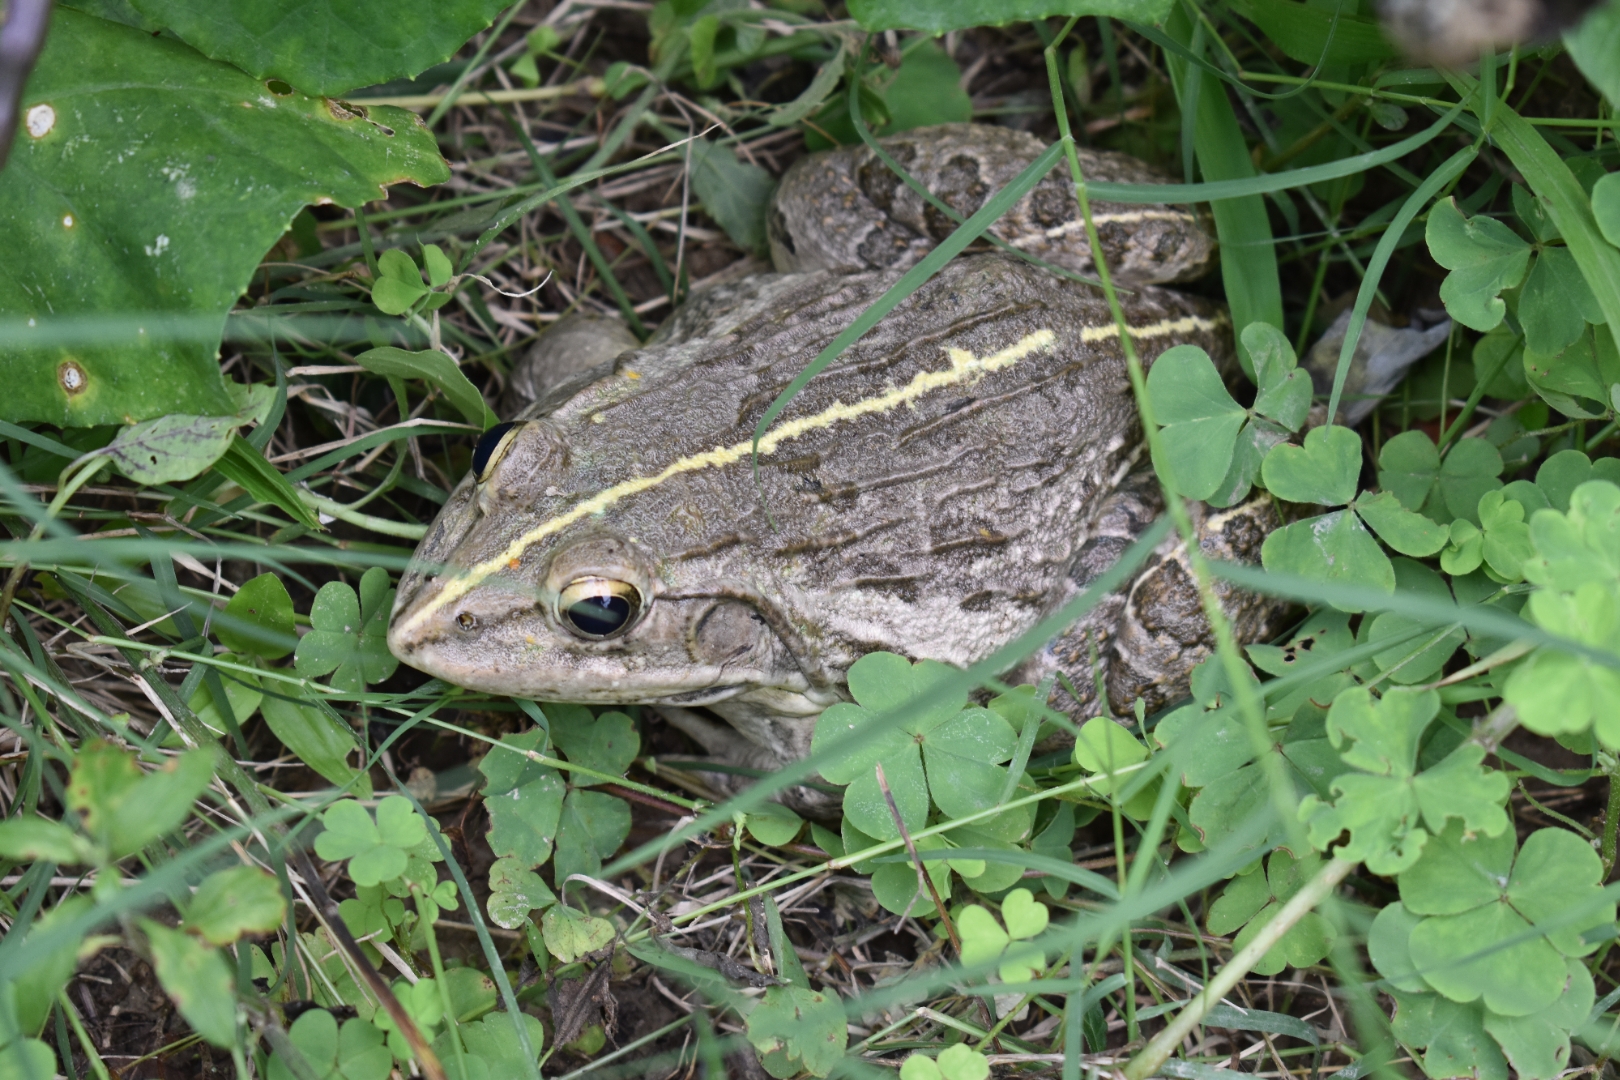 a frog showing adaptation